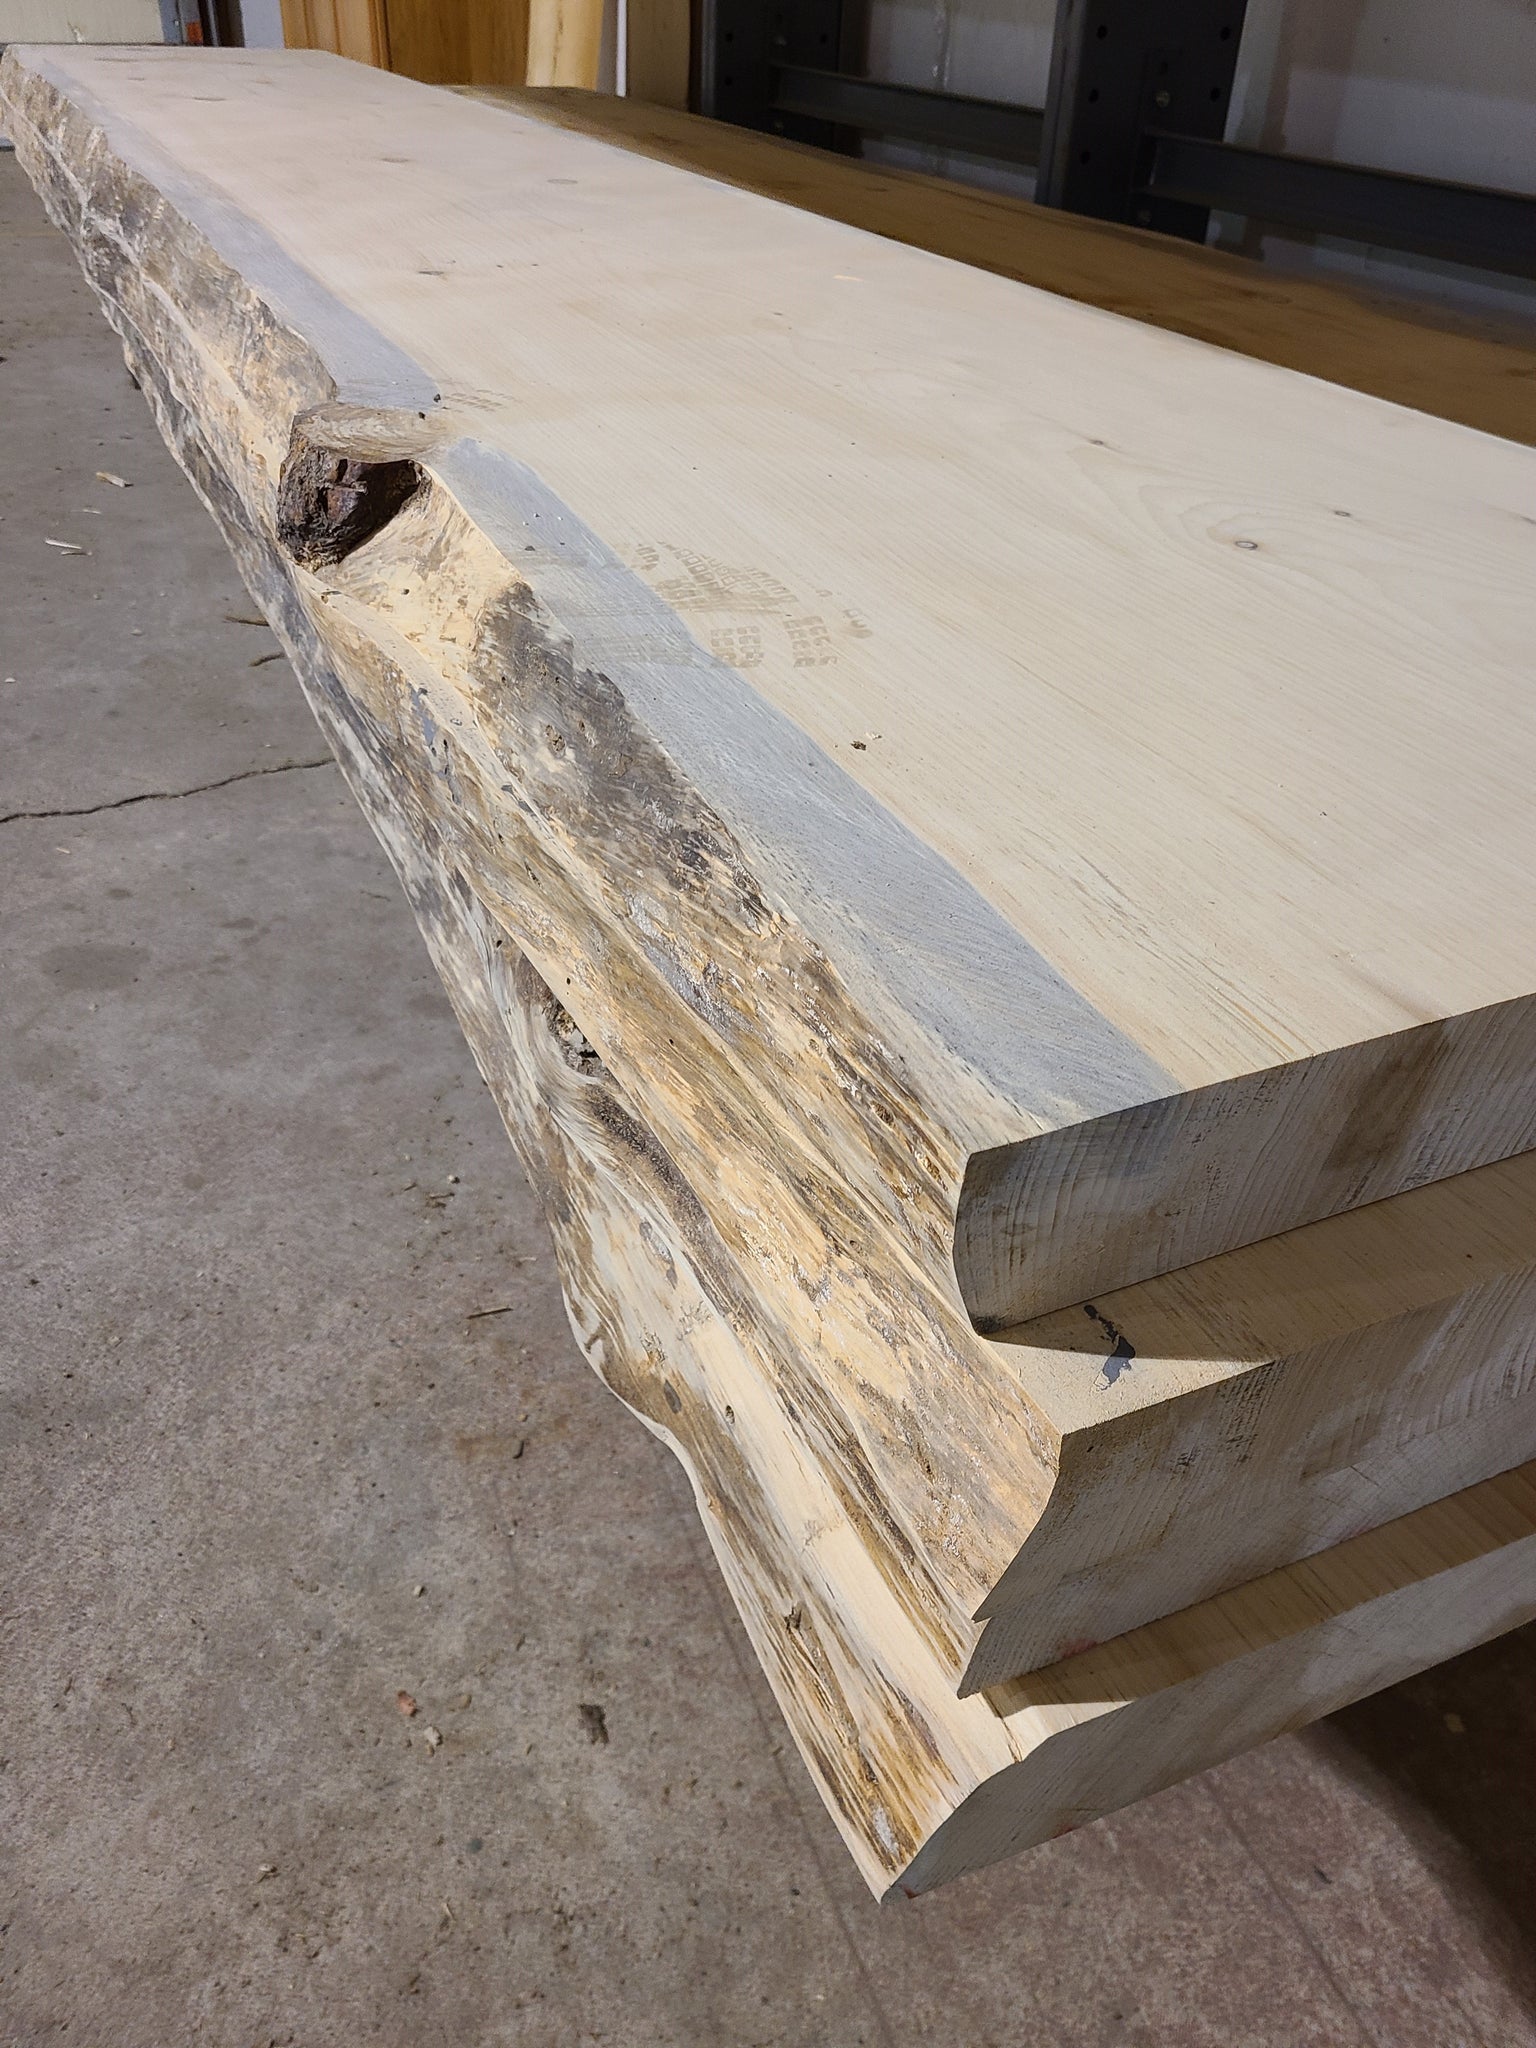 Bar Top Photo Gallery - Live Edge Wood - The Lumber Shack